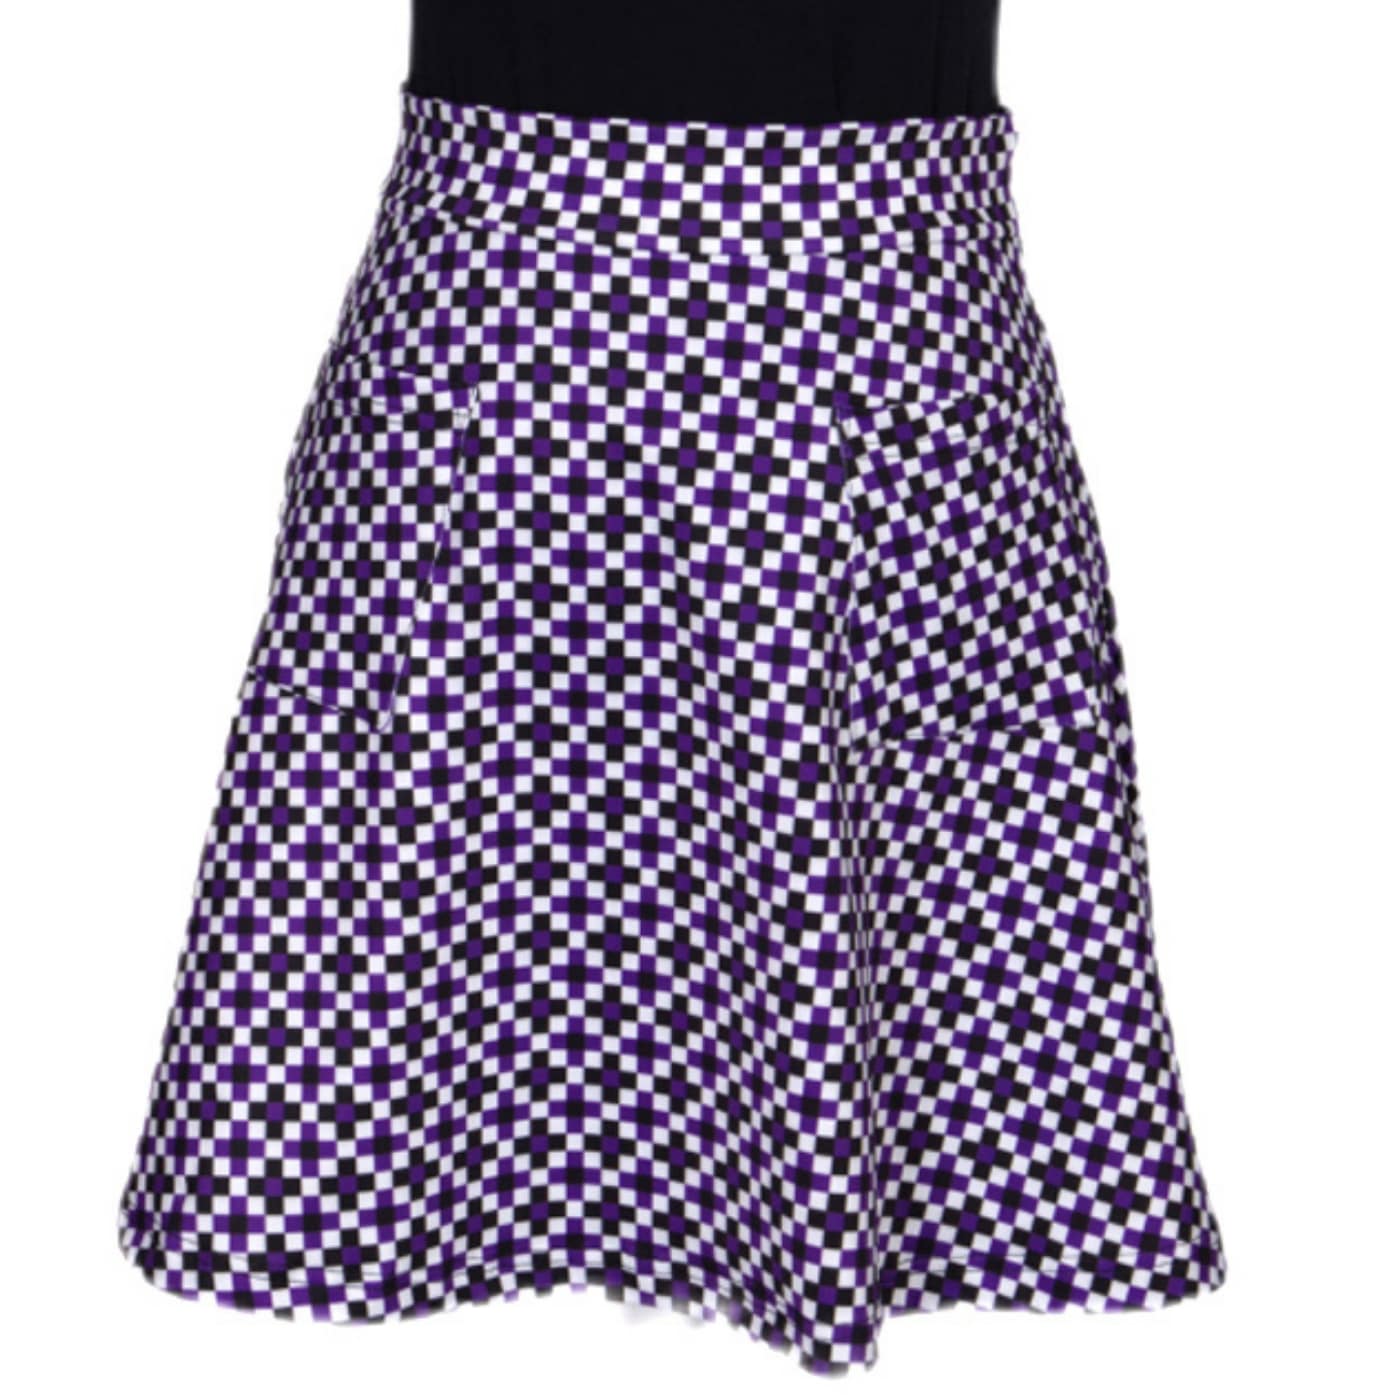 Purple Check Short Skirt by RainbowsAndFairies.com.au (Check Print - Purple - Black - White - Kitsch - Aline Skirt With Pockets - Vintage Inspired) - SKU: CL_SHORT_CHECK_PUR - Pic-02